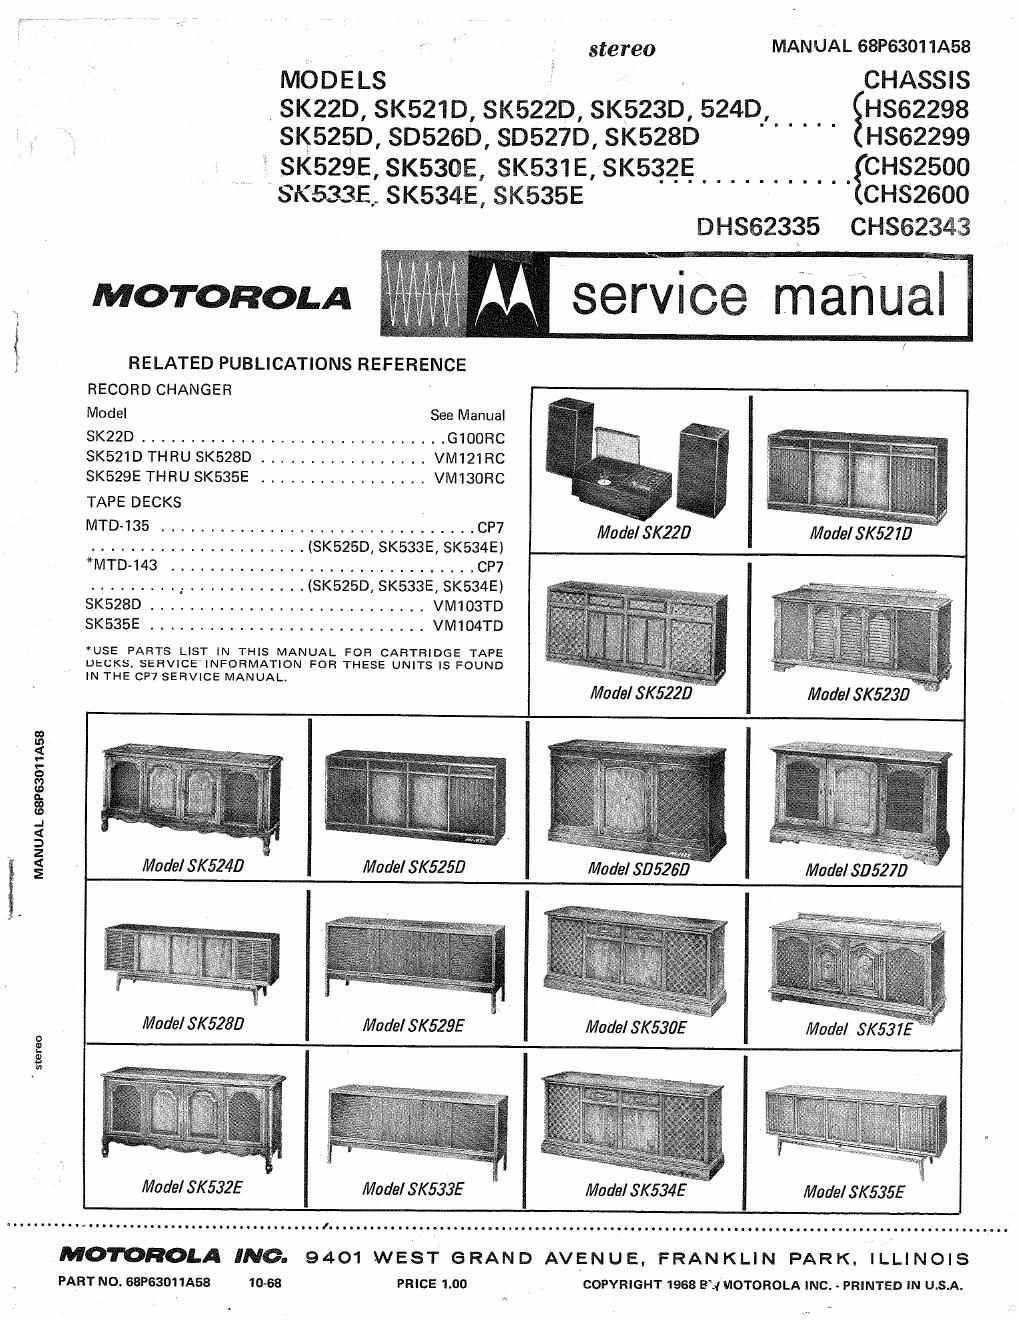 motorola sk 525 d service manual